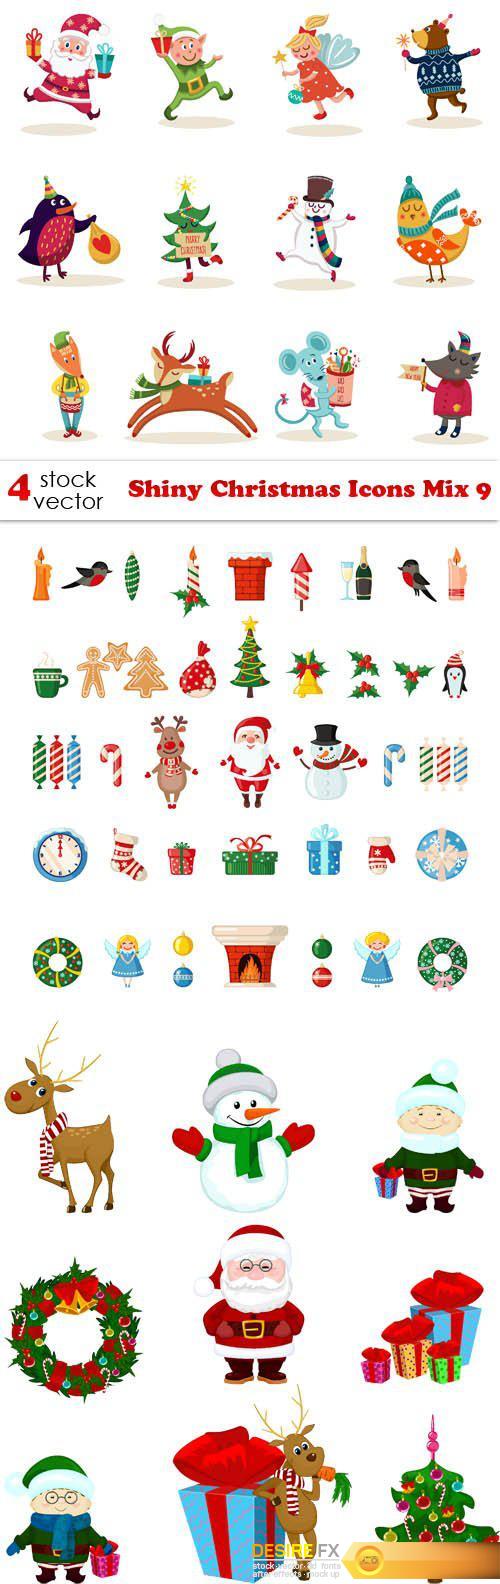 Vectors - Shiny Christmas Icons Mix 9